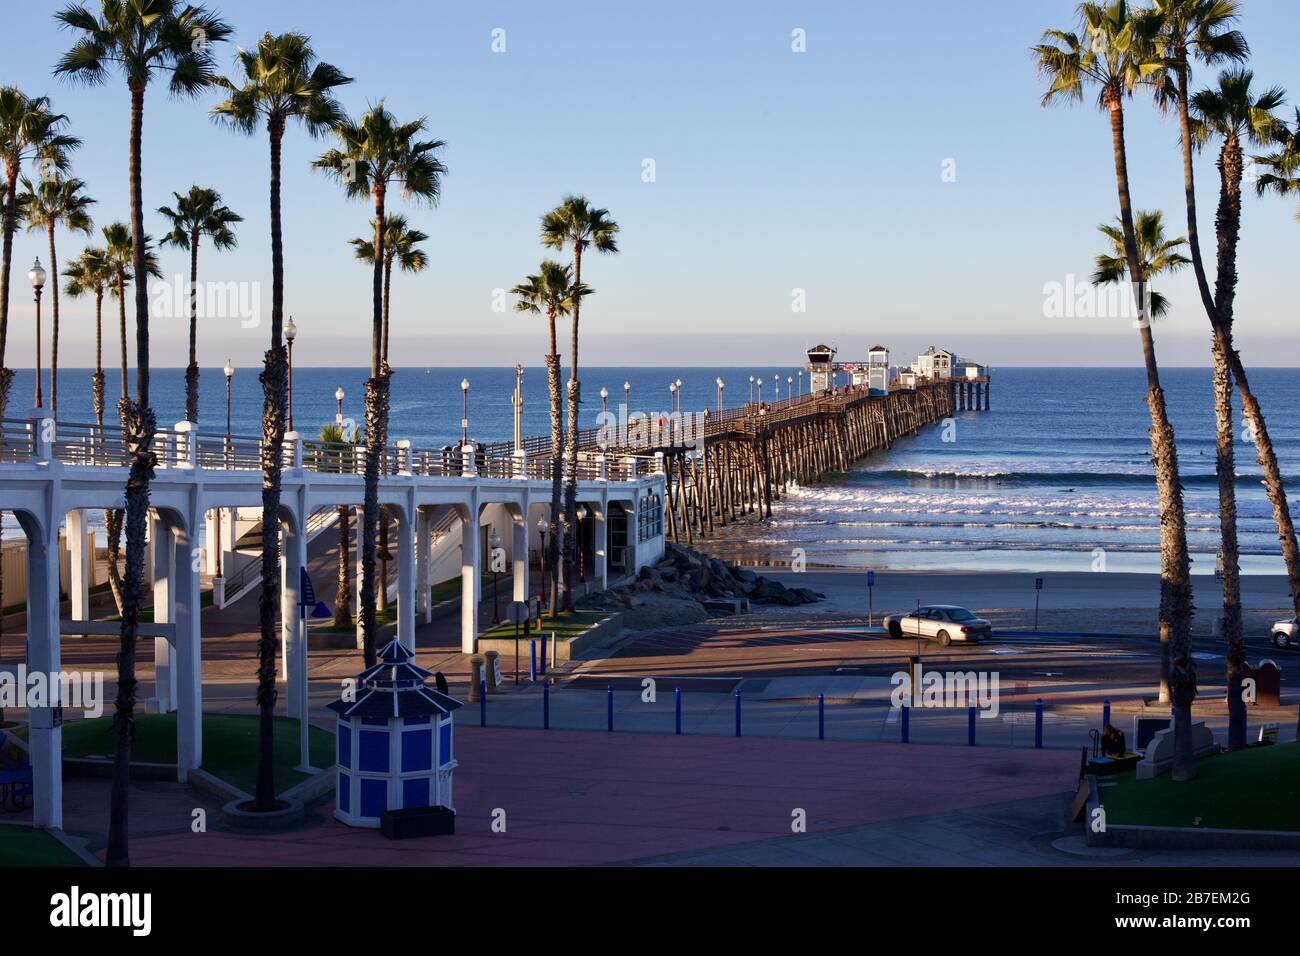 Oceanside California pier and beach Stock Photo